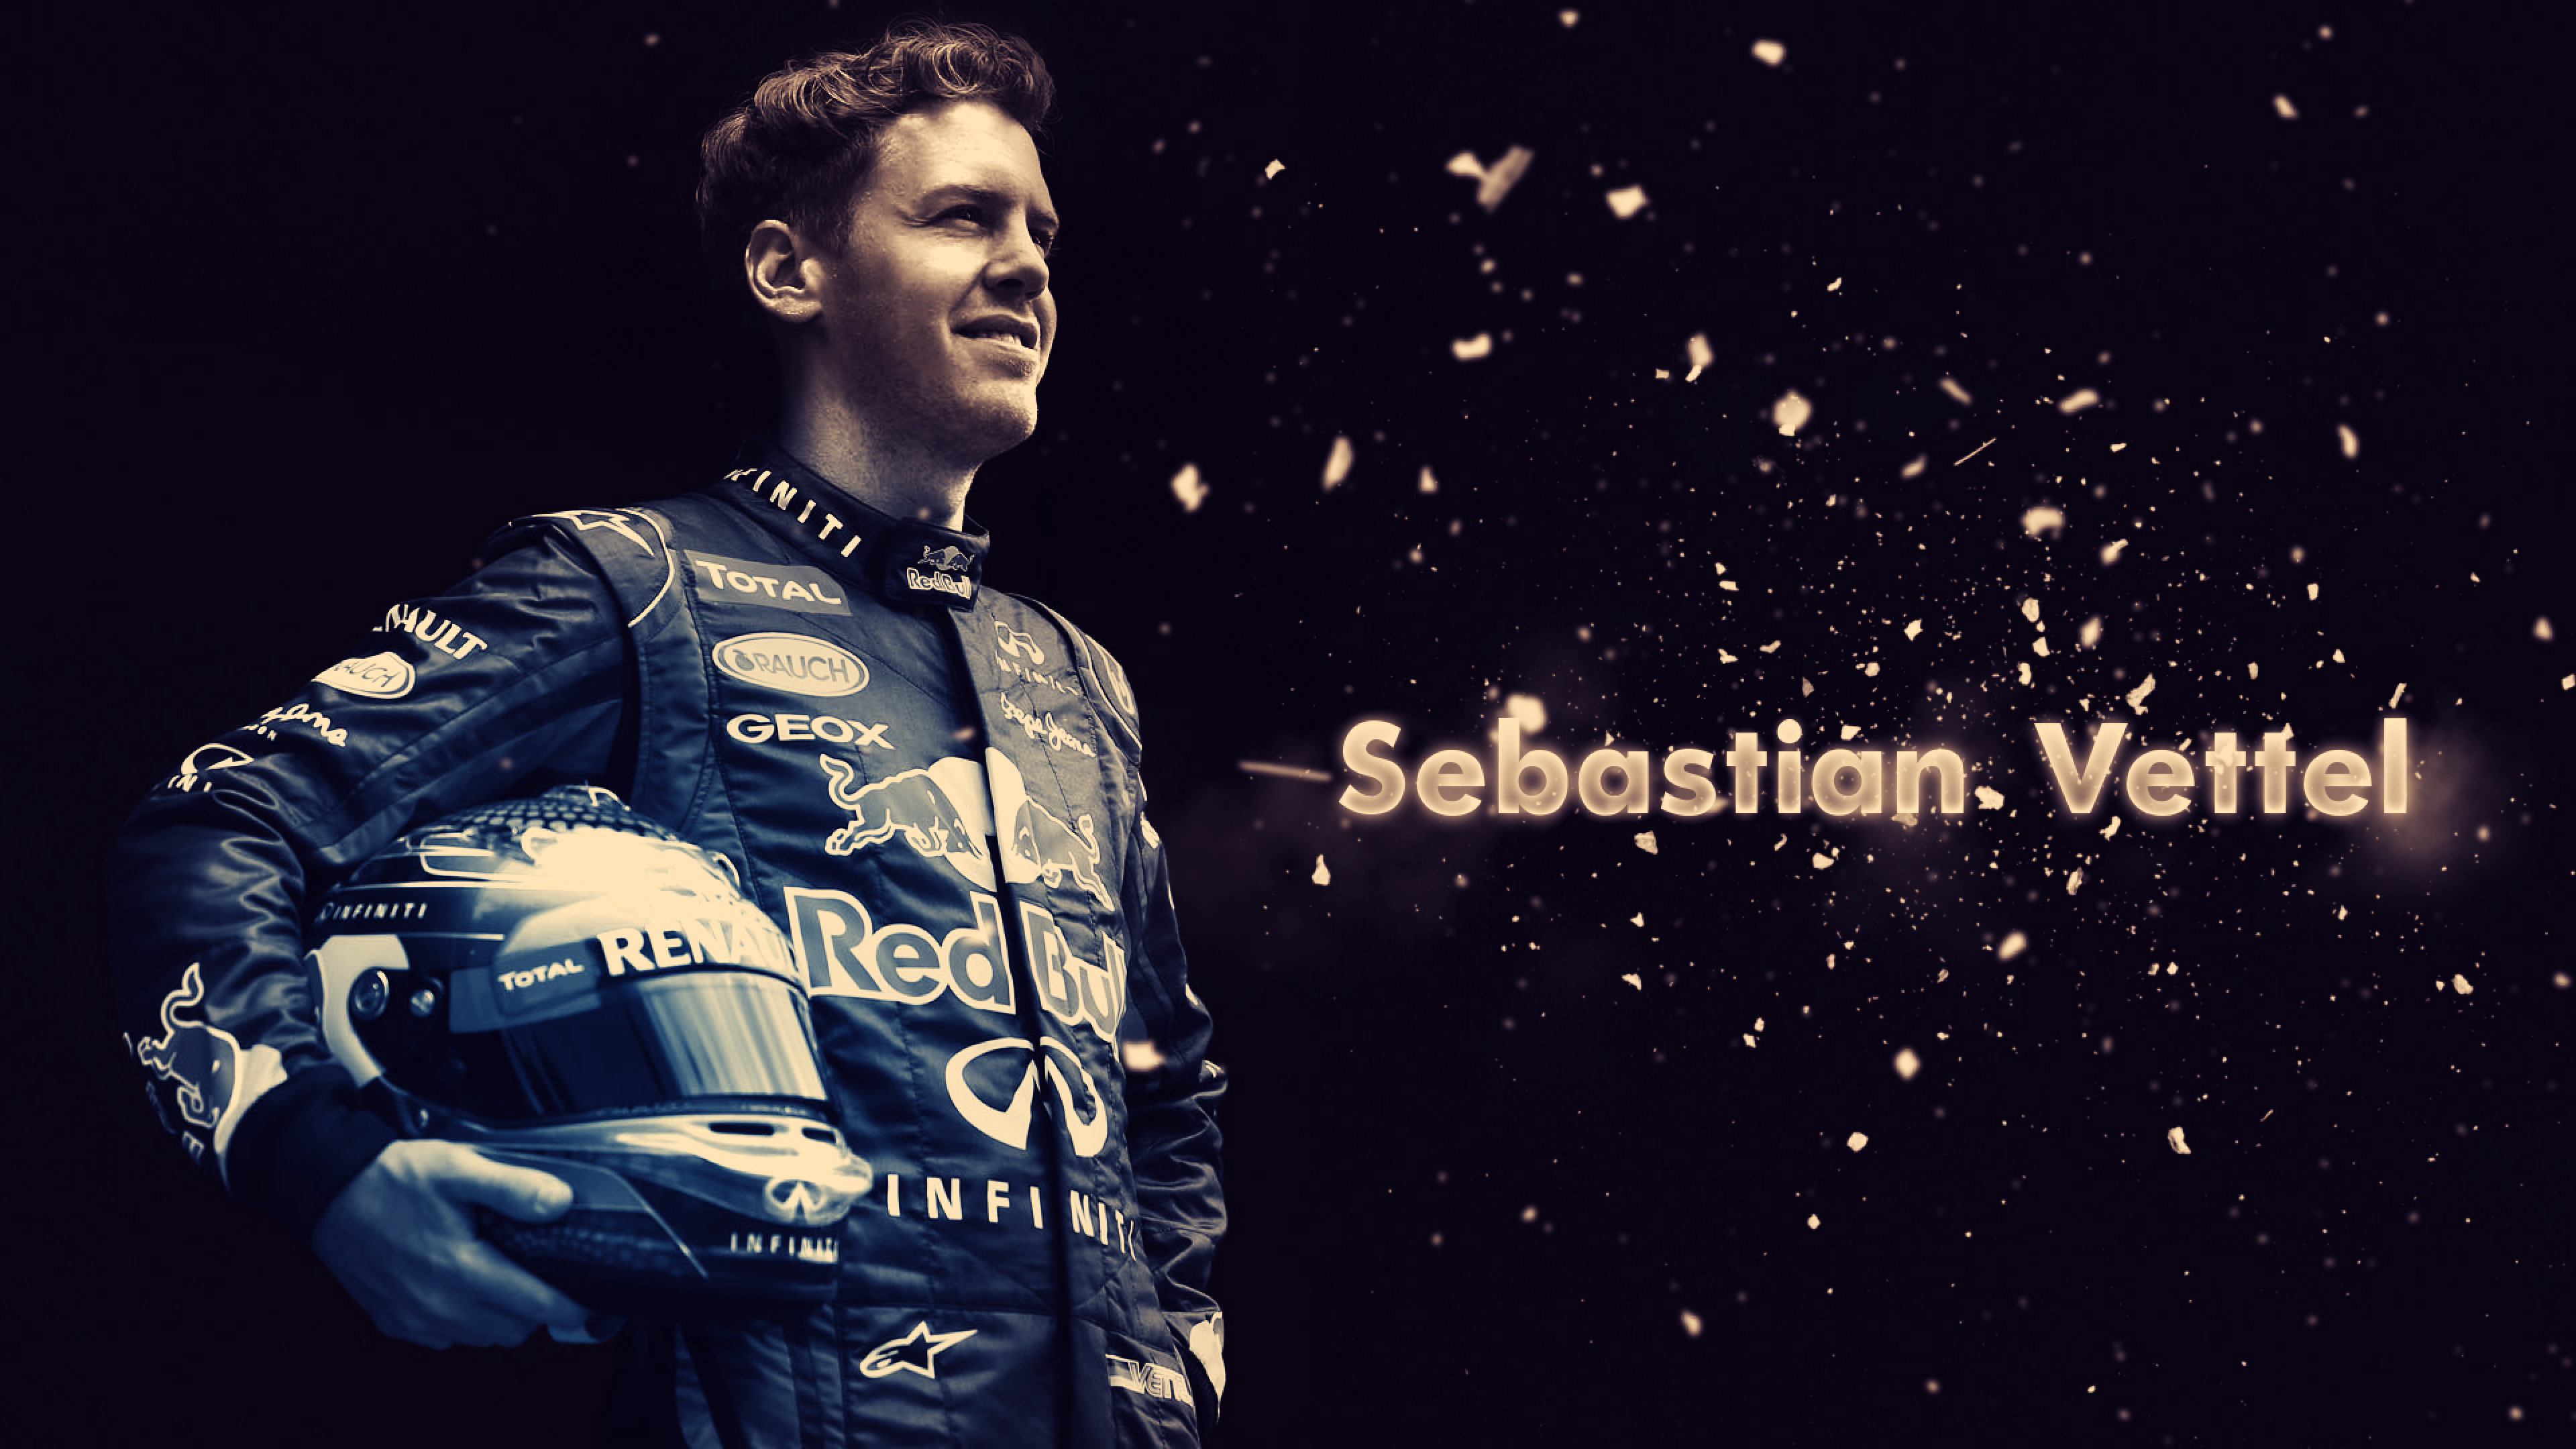 Гонщики саундтреки. Феттель гонщик. Sebastian Vettel. Sebastian Vettel 2014. Себастьян Феттель ред Булл.